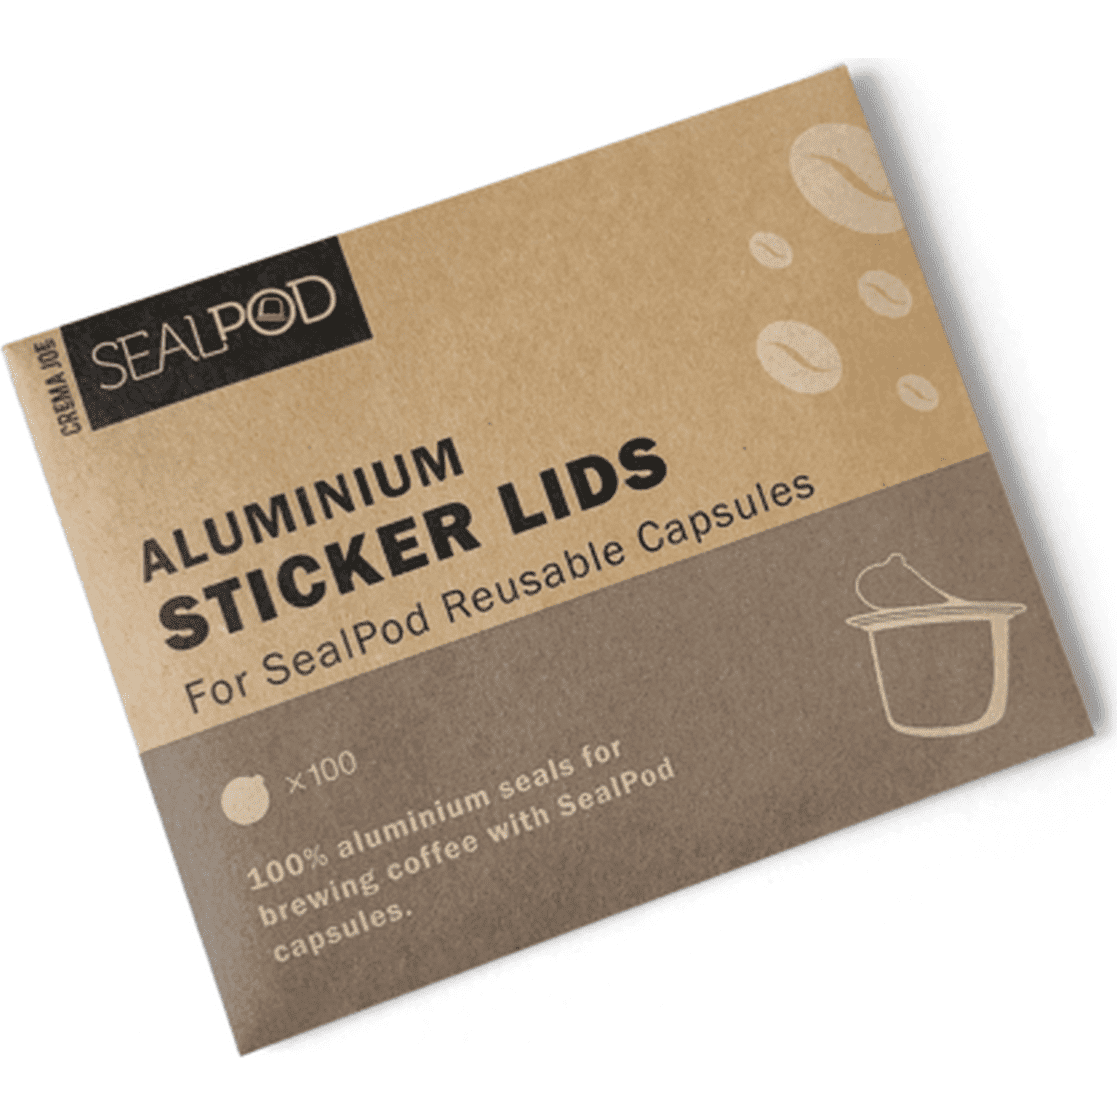  Sealpod Aluminium Espresso Sticker Lids for Reusable Coffee Capsules Packaging